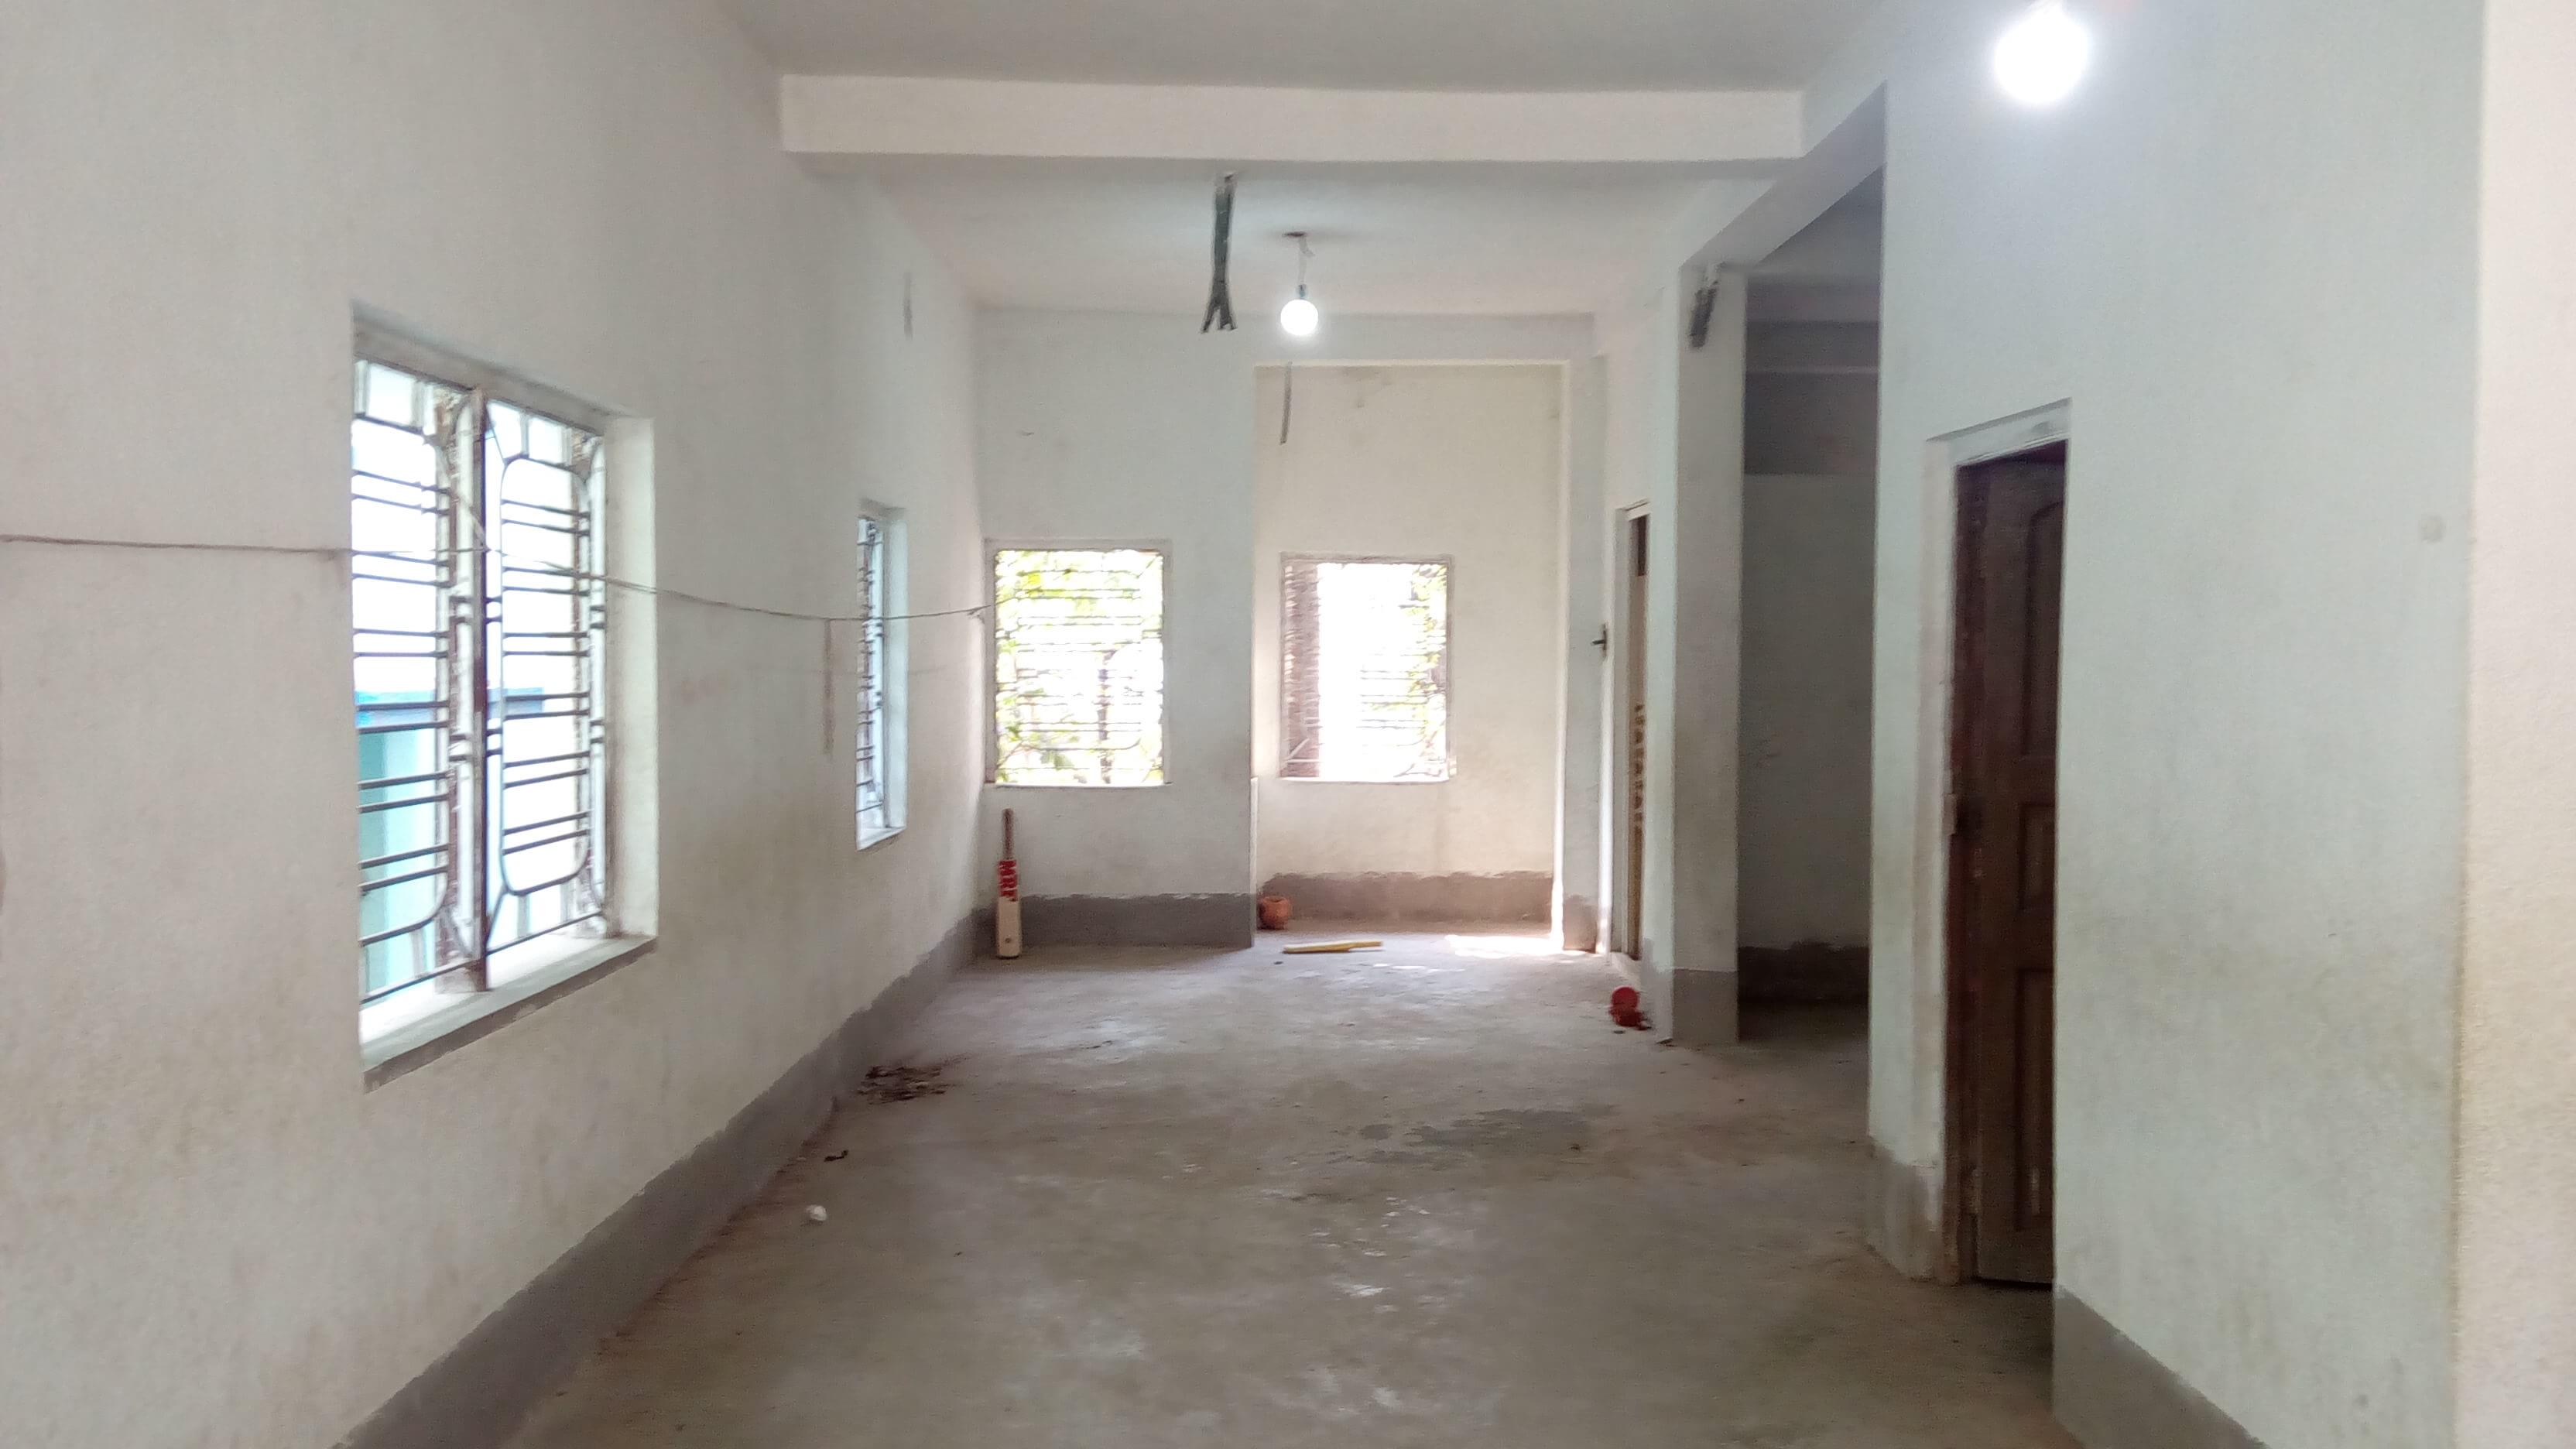 Office For Rent in Sodepur,Kolkata (Id:22013)